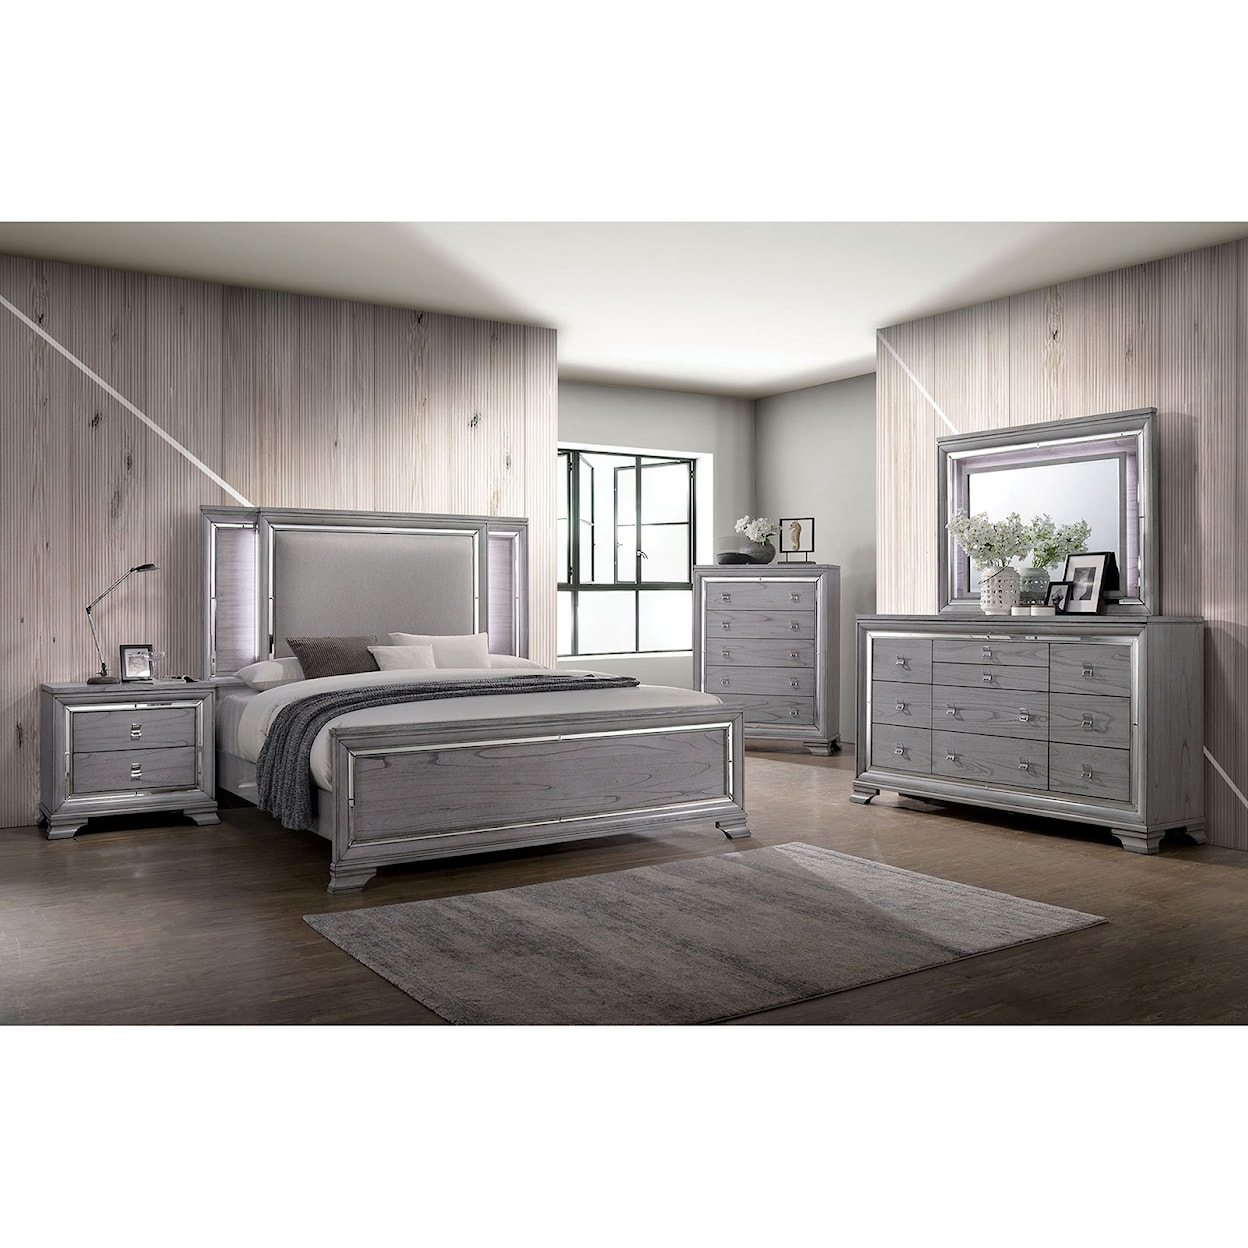 Furniture of America Alanis King Bedroom Set